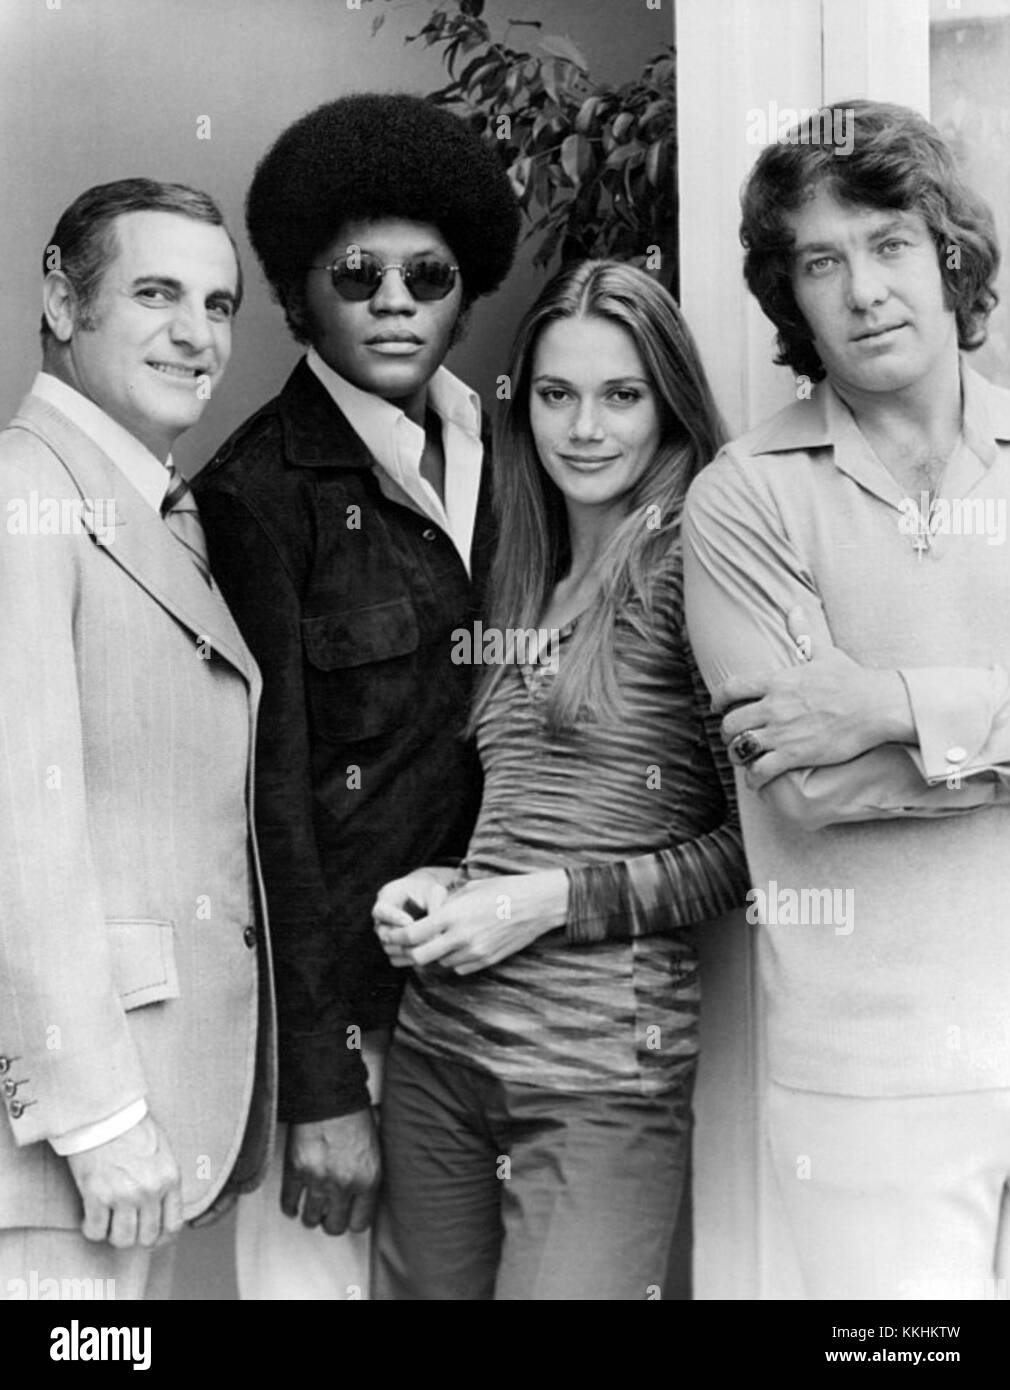 Mod Squad cast photo 1972 Stock Photo